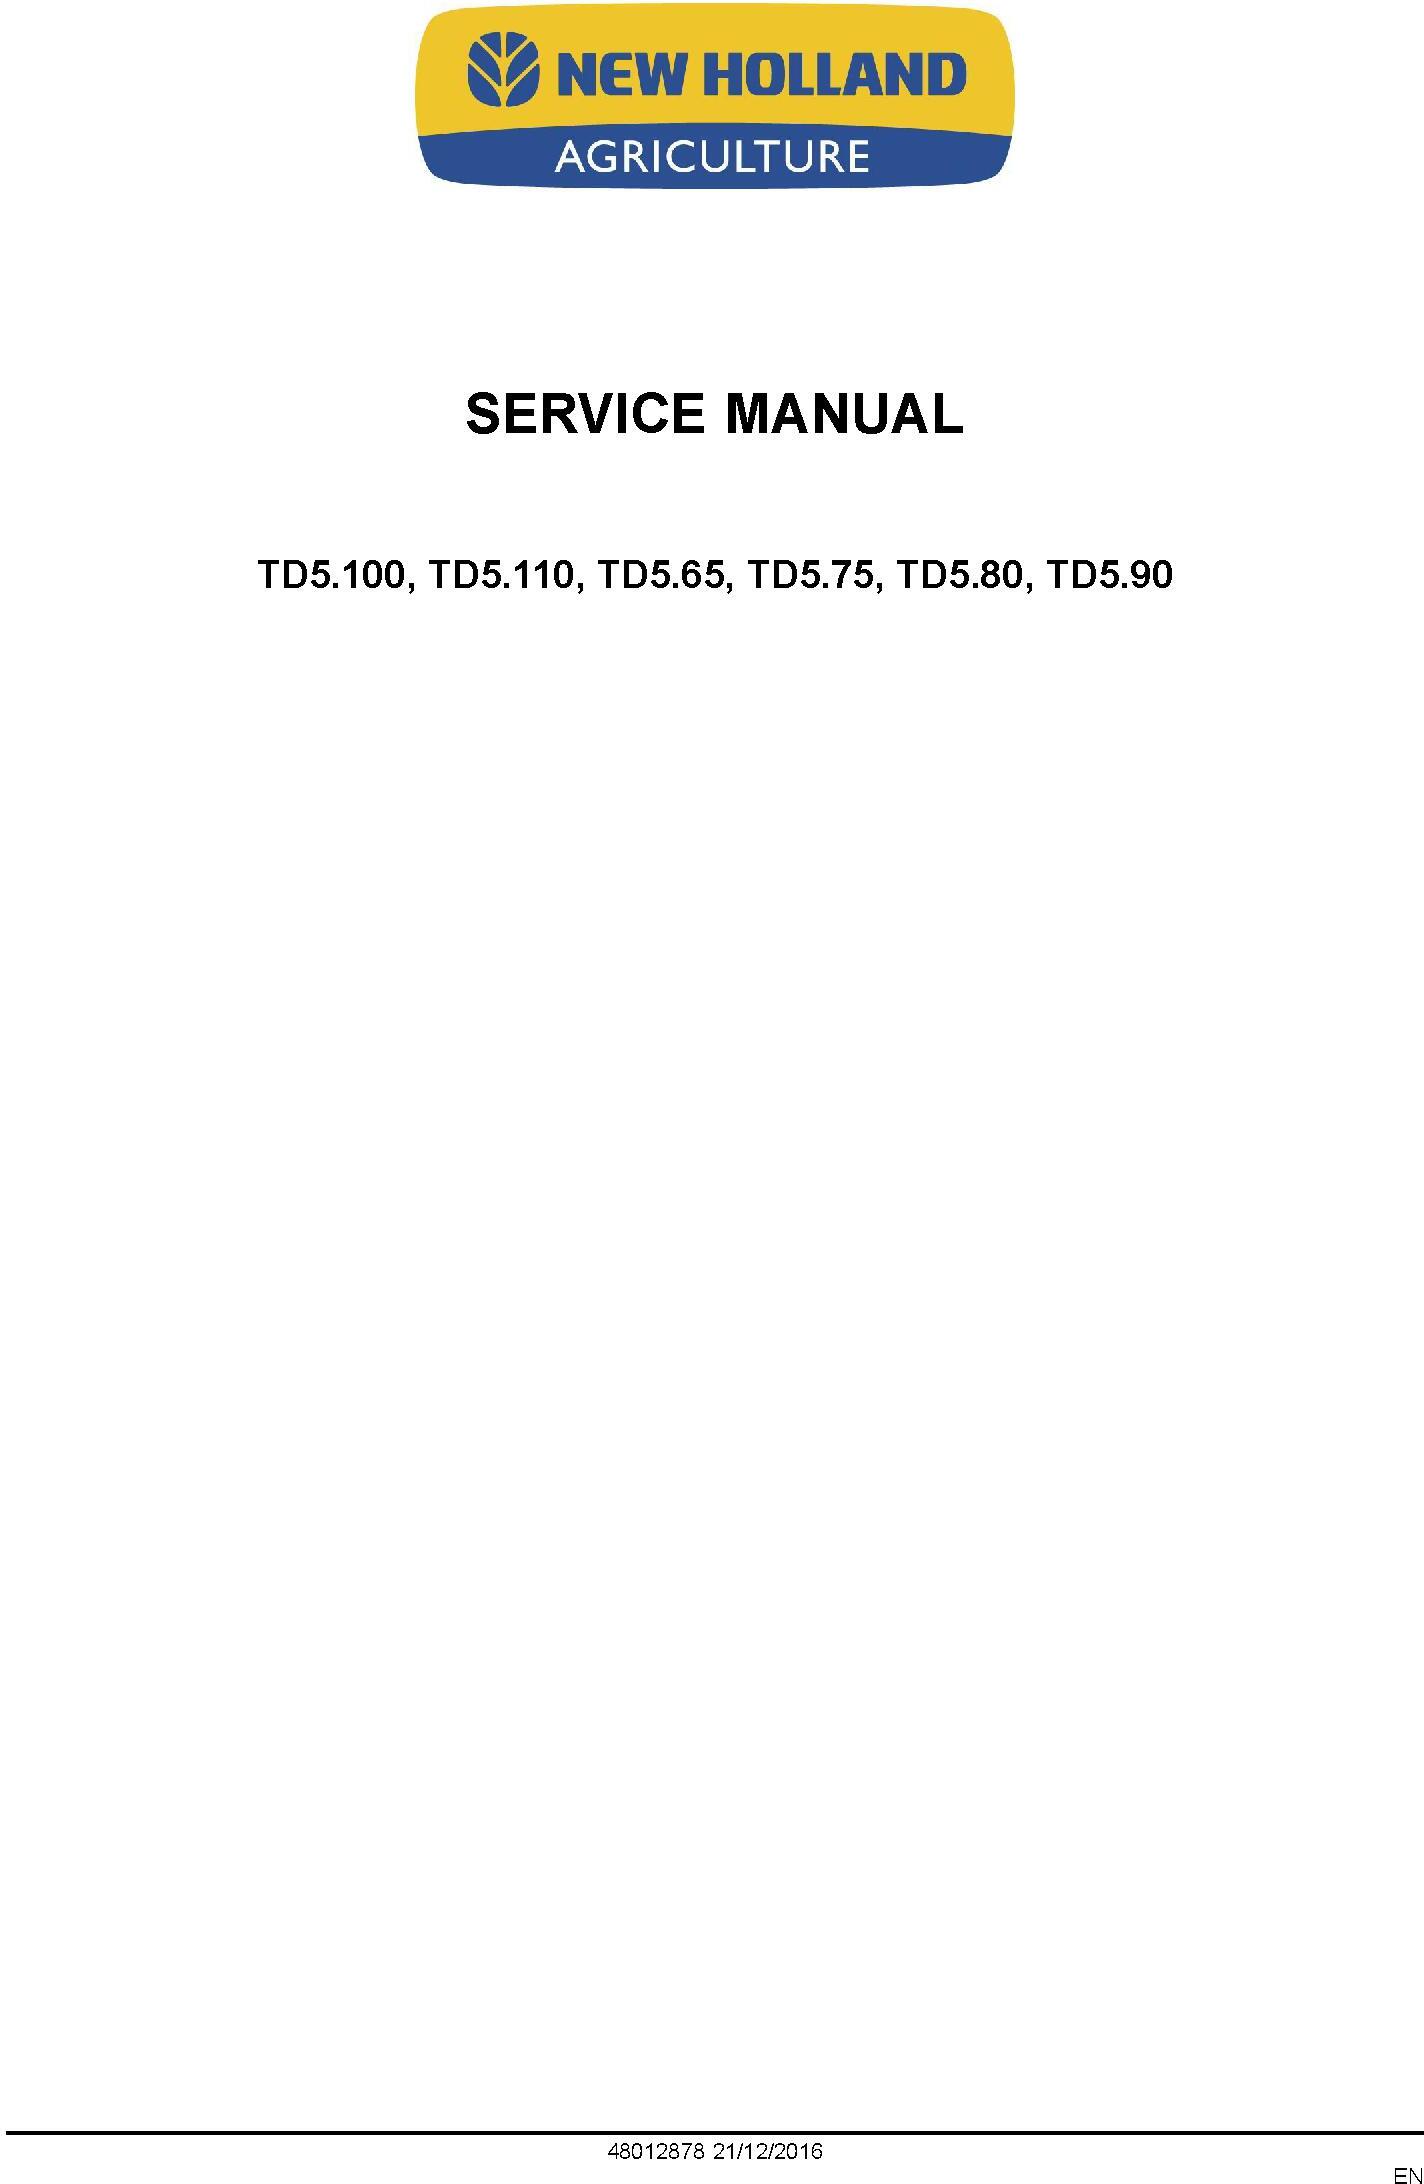 New Holland TD5.65, TD5.75, TD5.80, TD5.90, TD5.100M, TD5.110 Tractors Service Manual - 19477